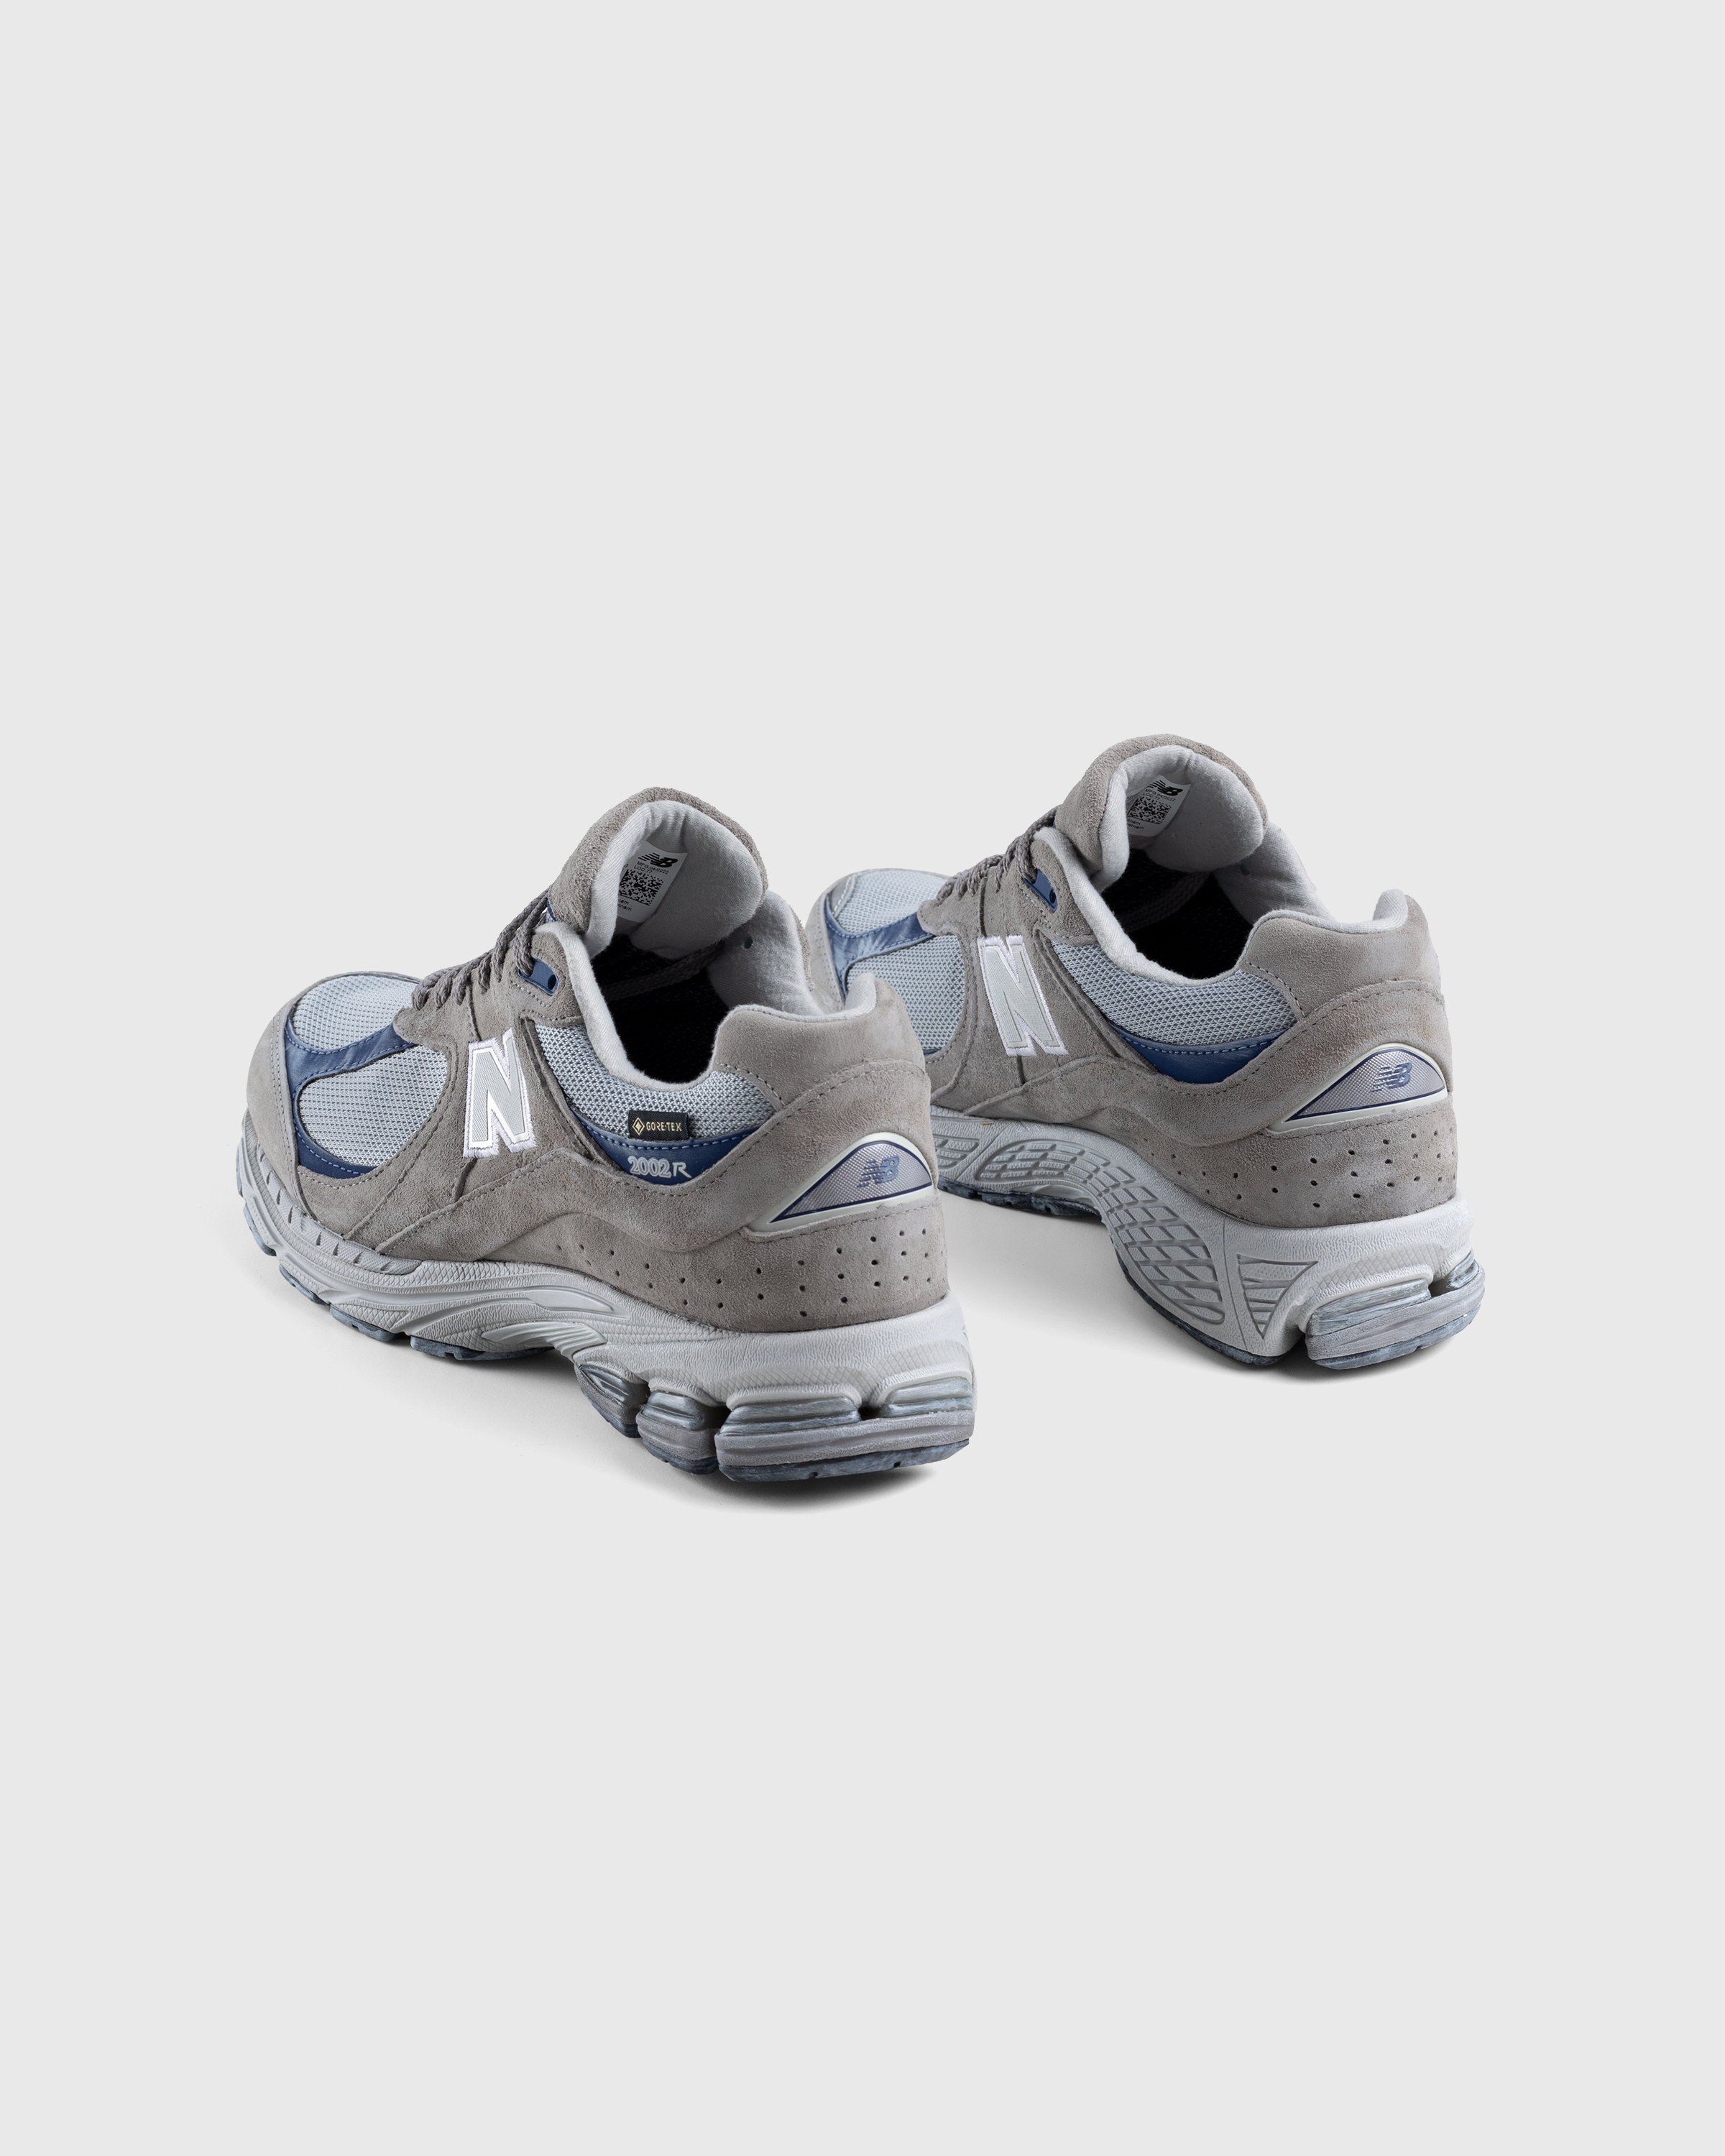 New Balance - M2002RXB Marblehead - Footwear - Grey - Image 4